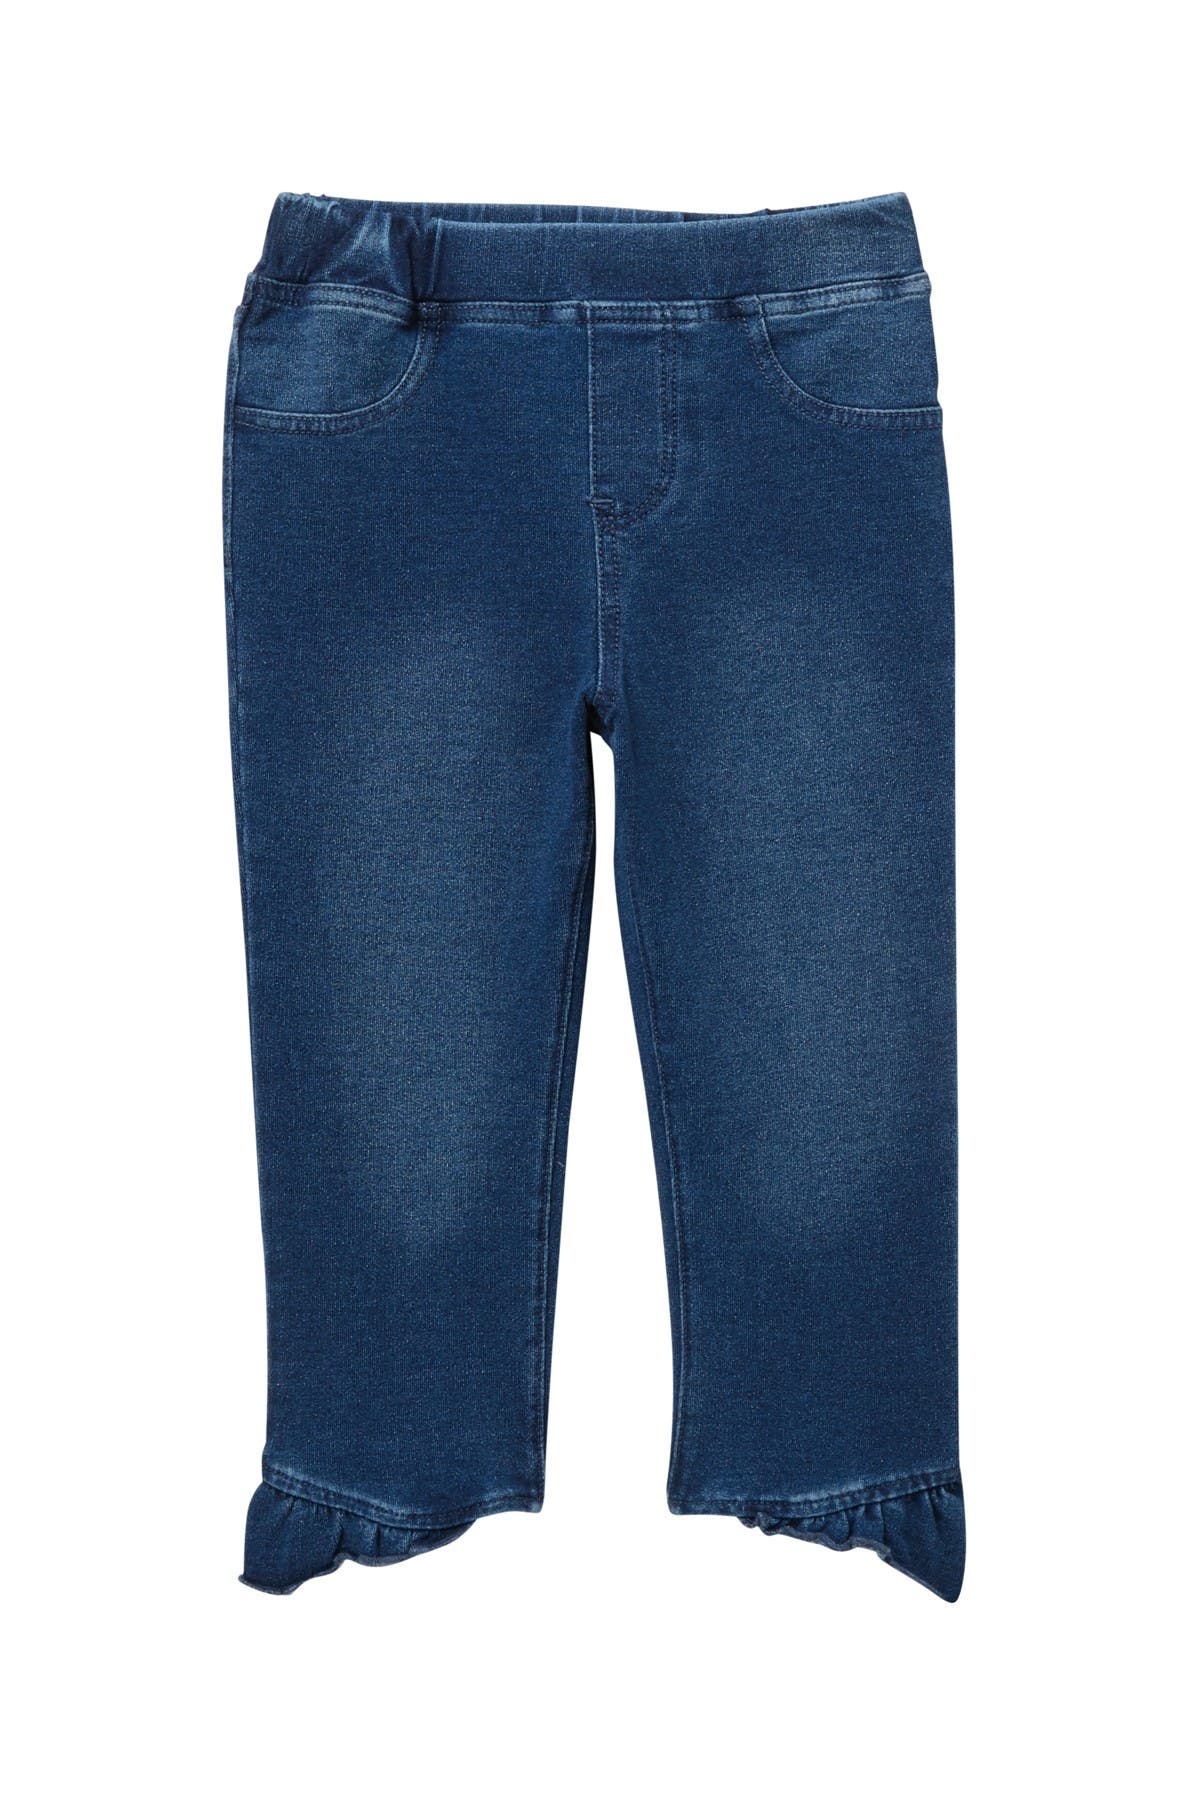 ruffle capri jeans